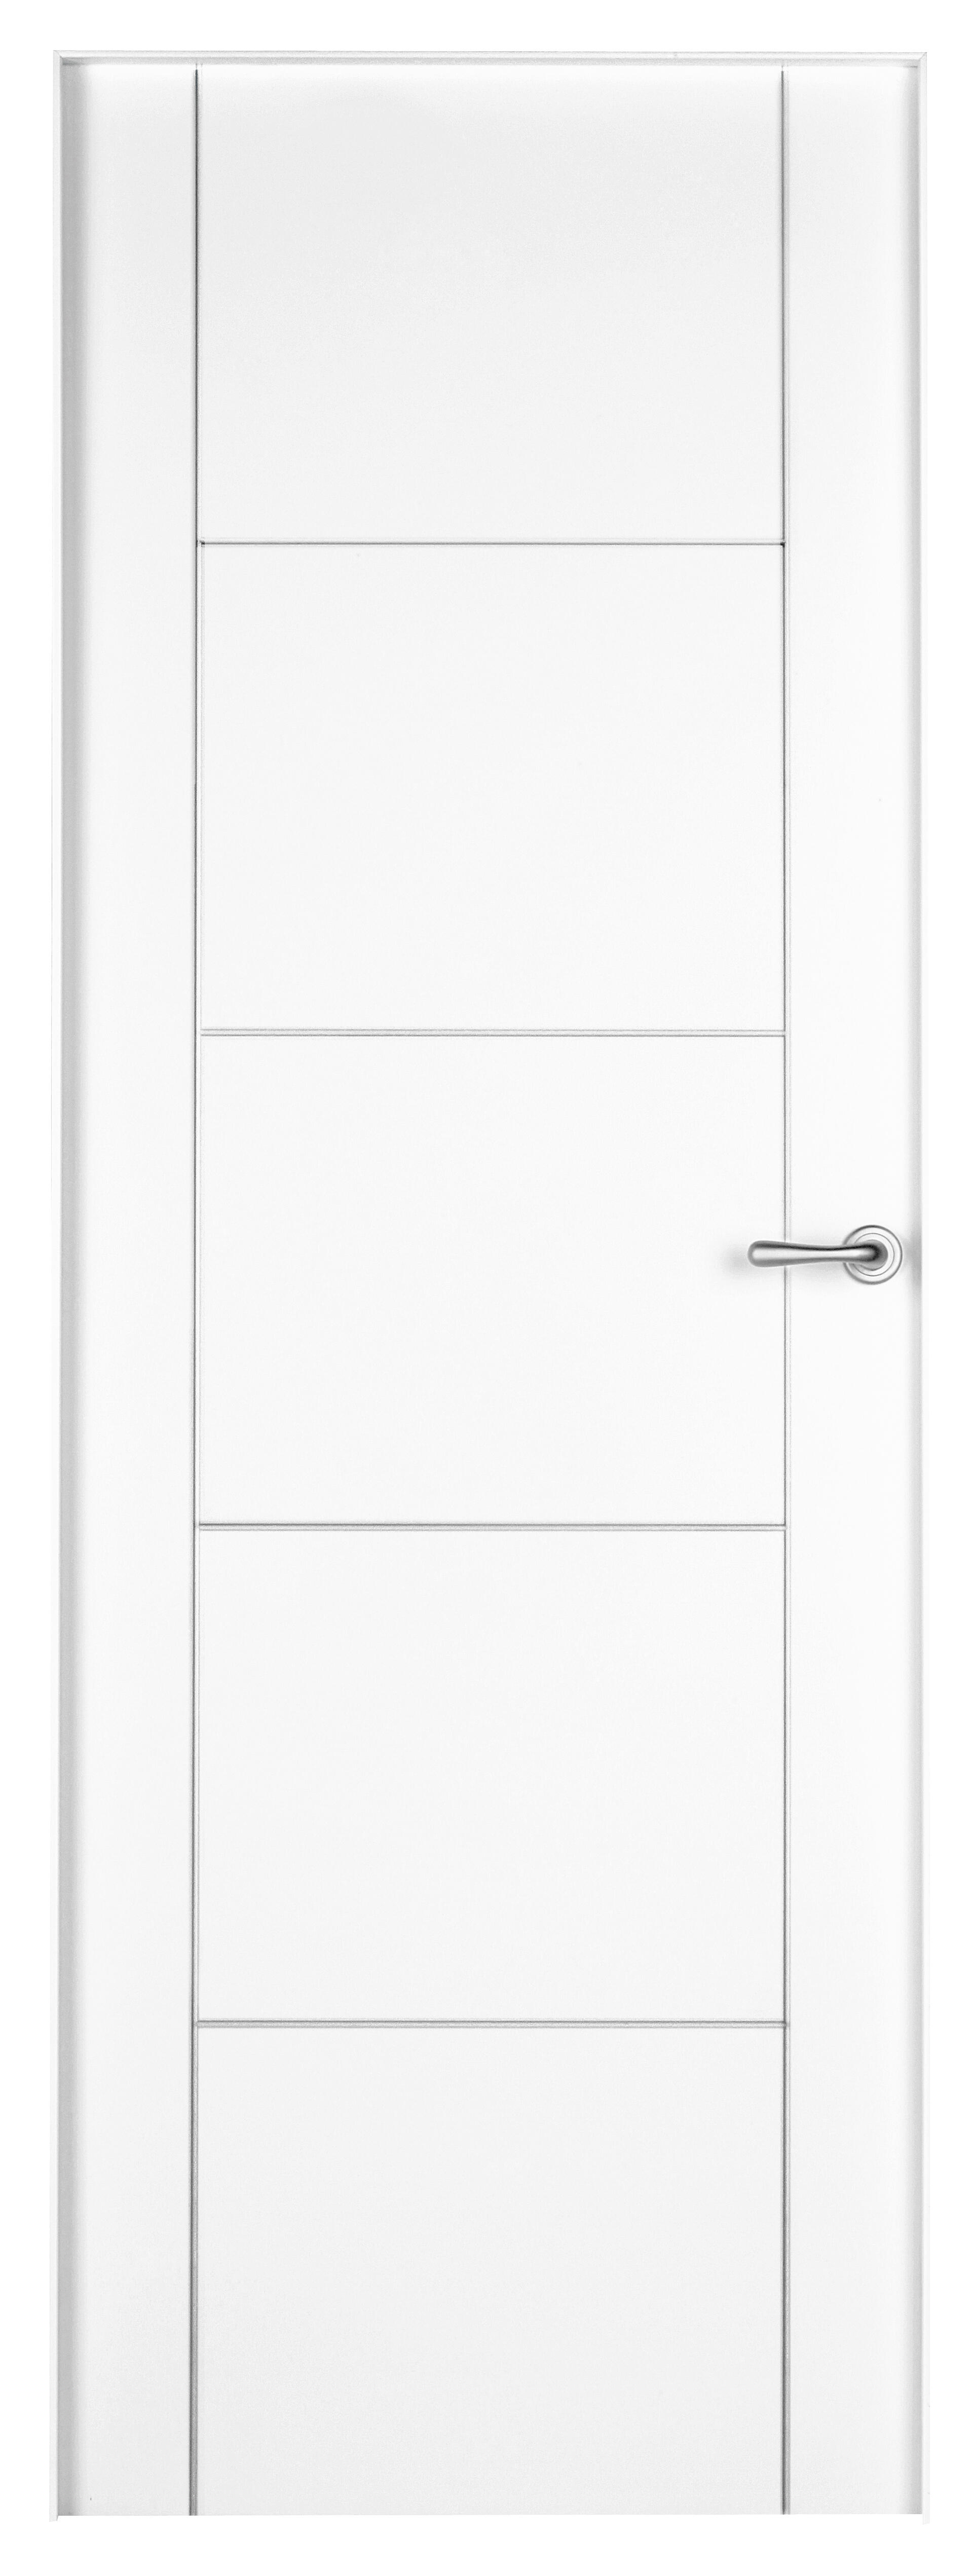 Puerta noruega plus blanco apertura izquierda 9x72.5cm